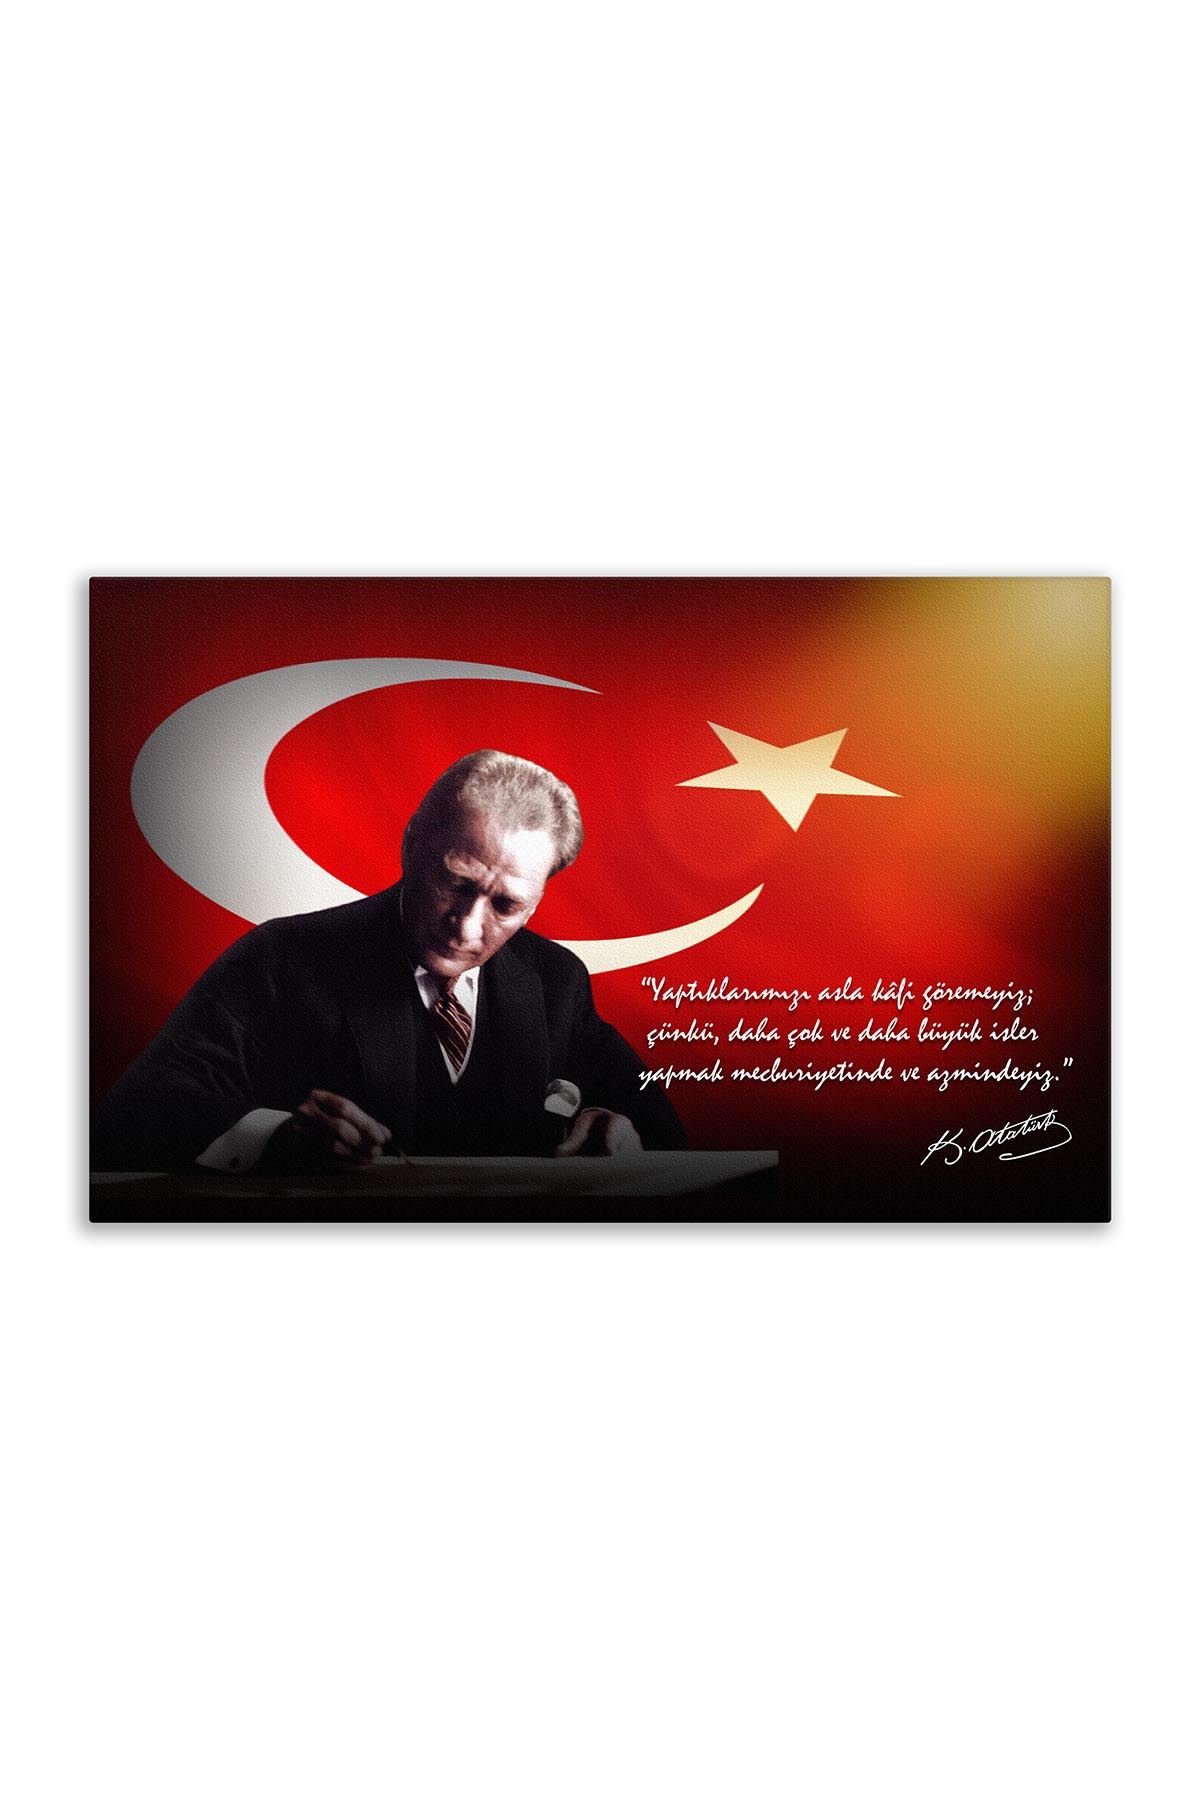 Atatürk Canvas Board With Turkish Flag | Printed Canvas Board | Customized Canvas Board 